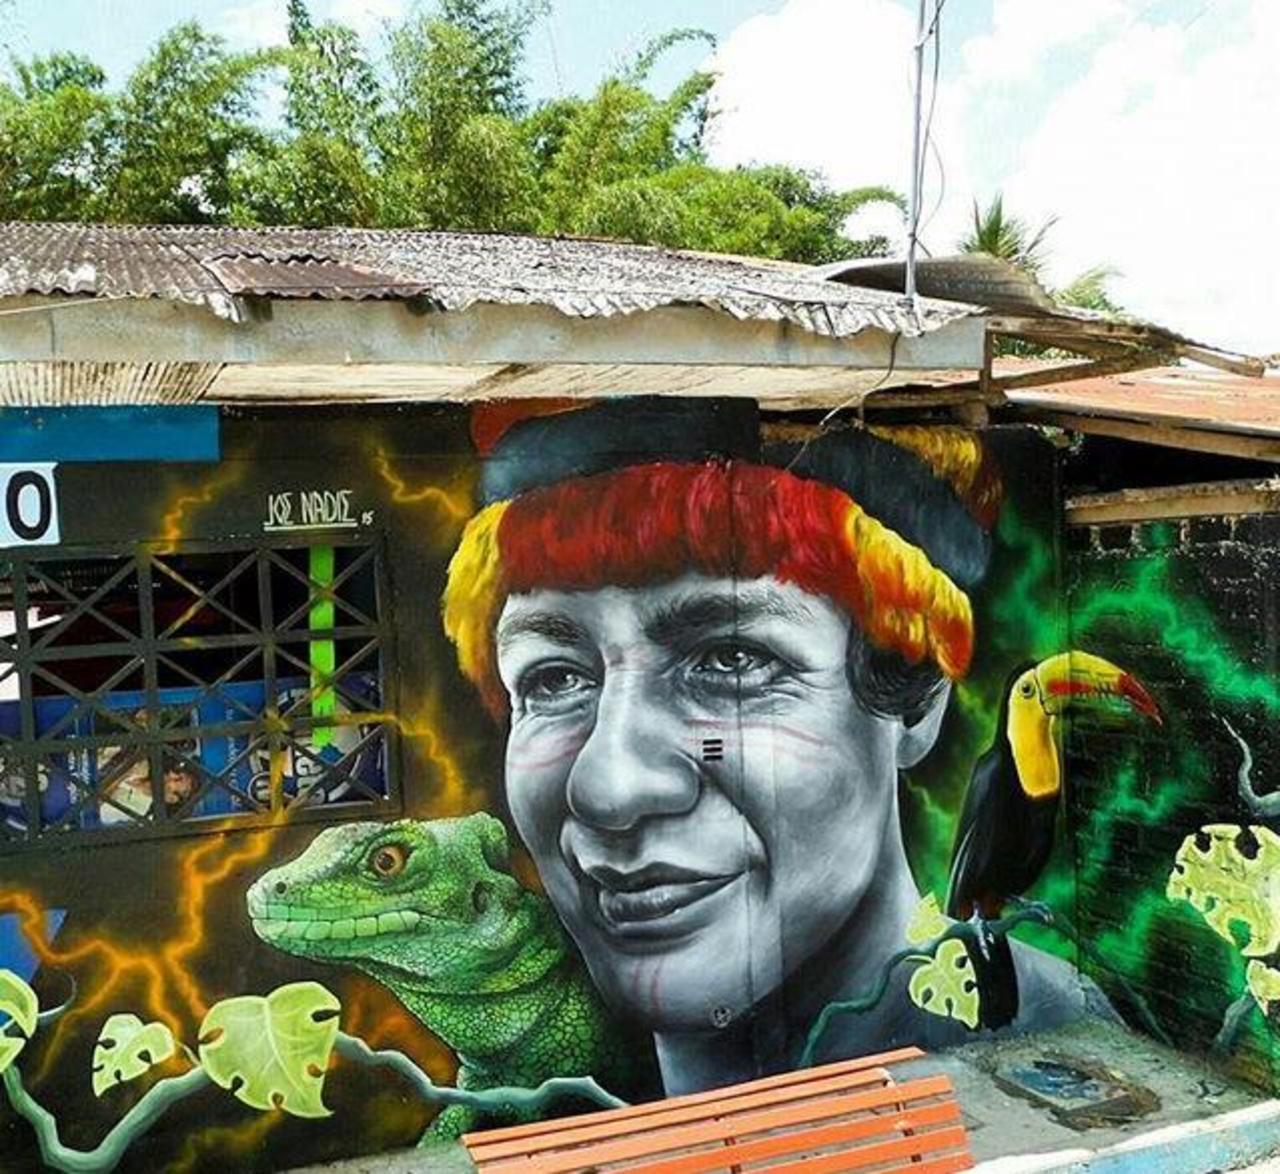 RT @GoogleStreetArt: Street Art by Joe Nadie

#art #mural #graffiti #streetart http://t.co/91Ni7ji1b5